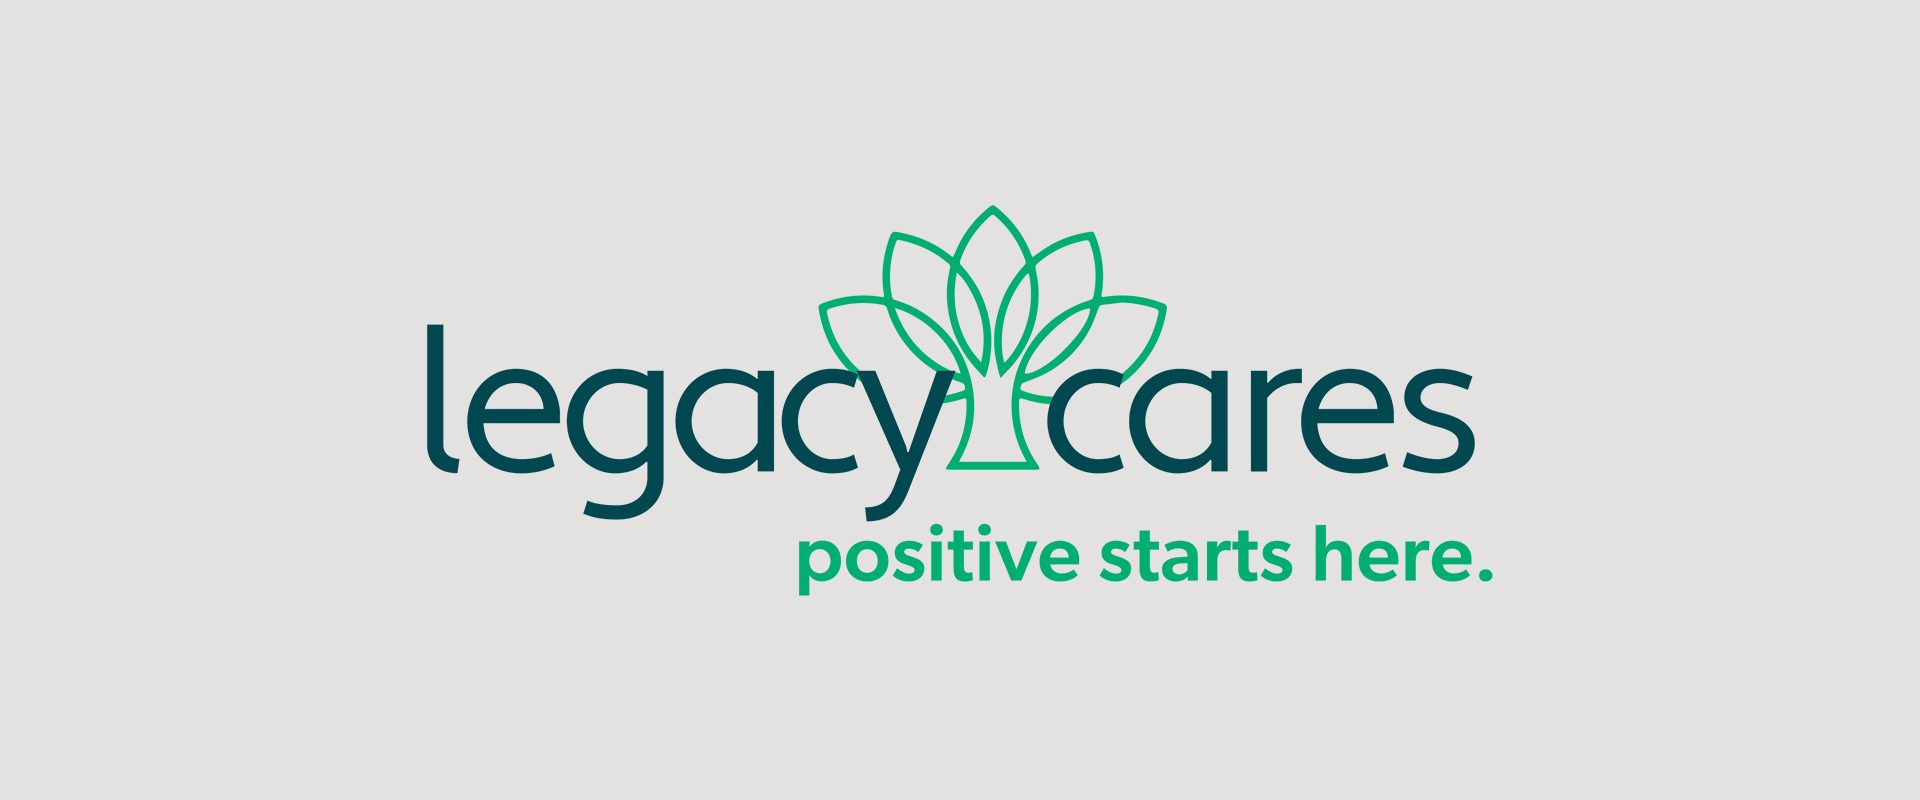 LegacyCares-LogoTagline